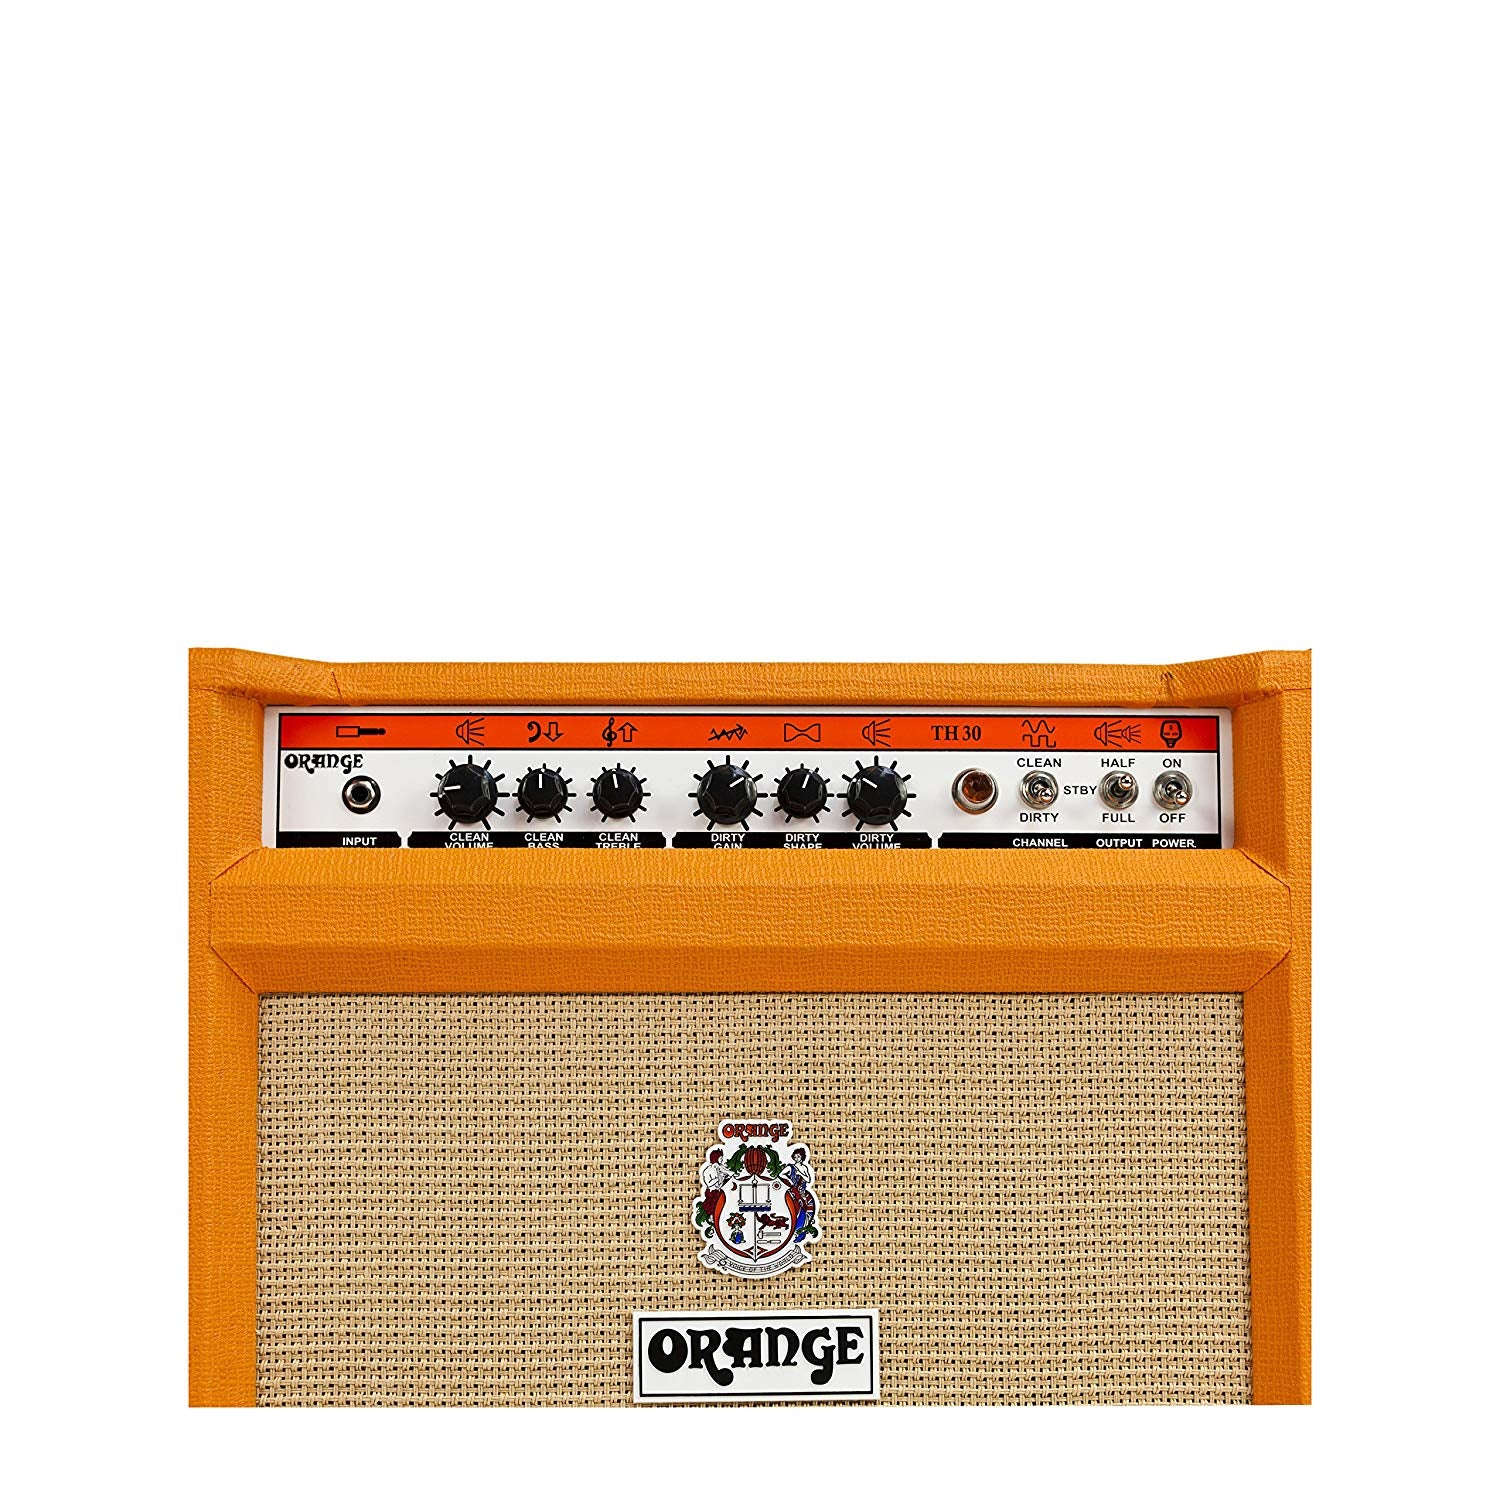 ORANGE THUNDER TH30C TWIN CHANNEL GUITAR AMPLIFIER COMBO, ORANGE, GUITAR AMPLIFIER, orange-thunder-th30c-twin-channel-guitar-amplifier-combo, ZOSO MUSIC SDN BHD